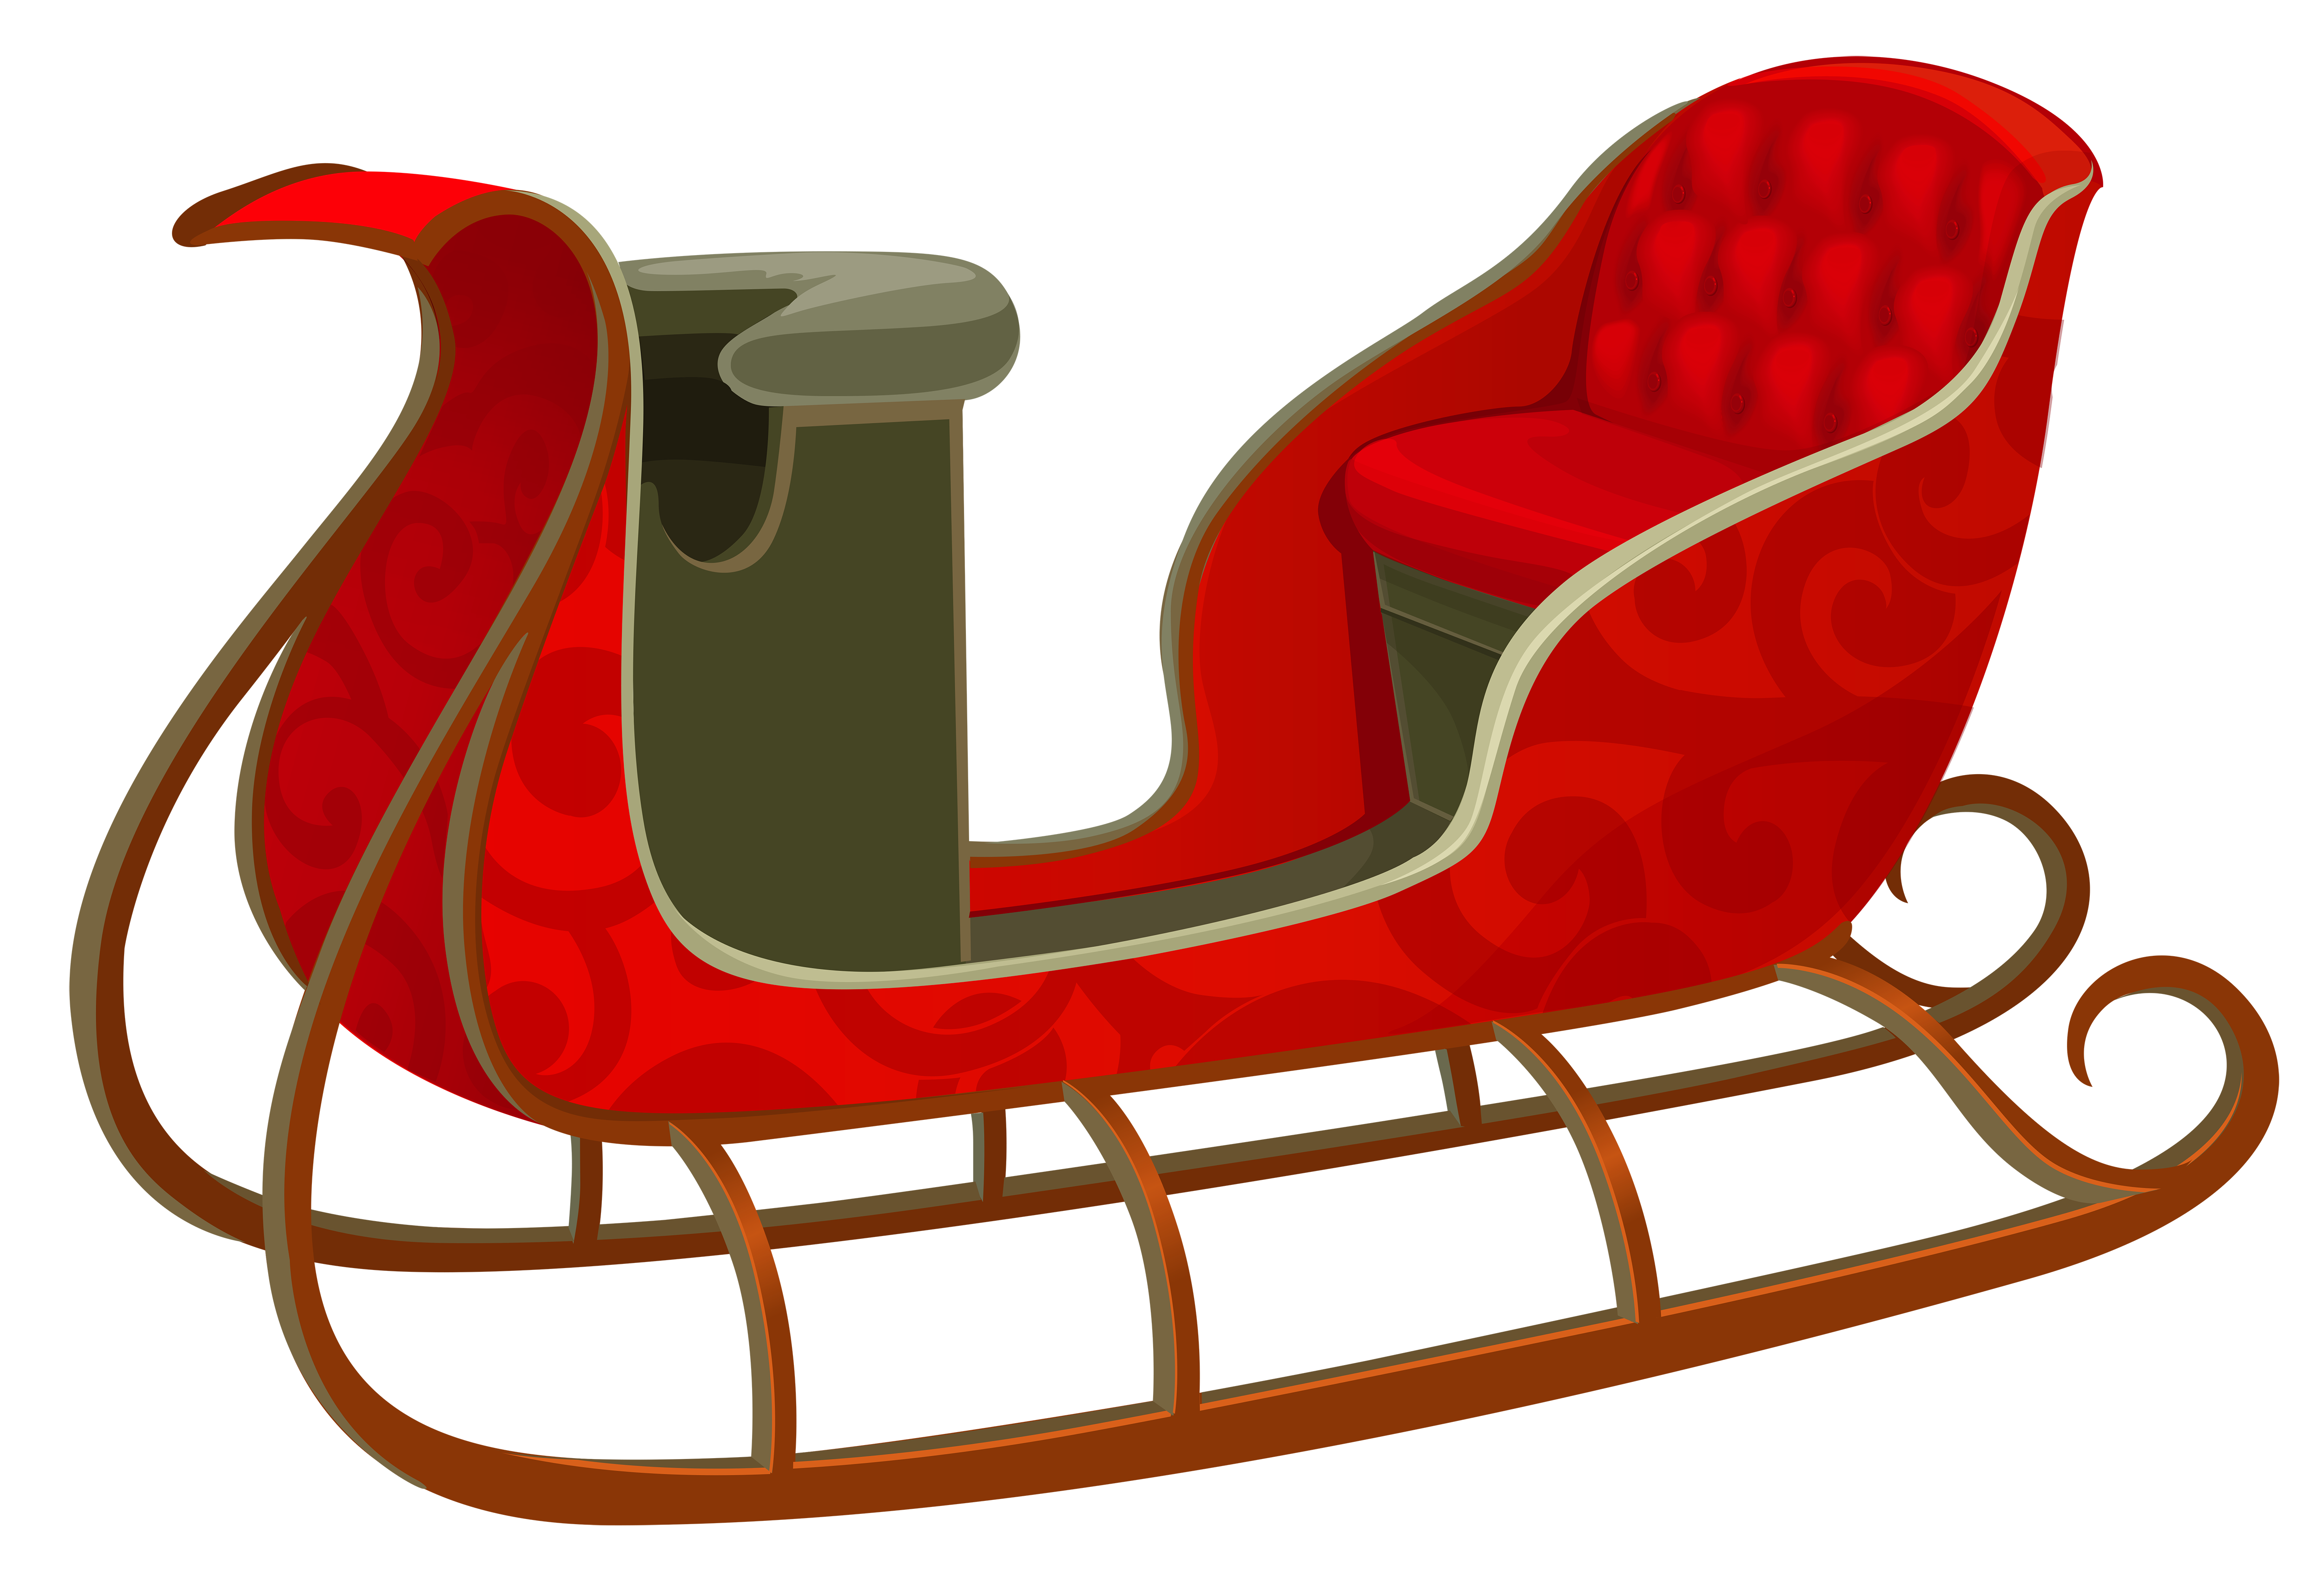 Santa sleigh PNG image free Download 